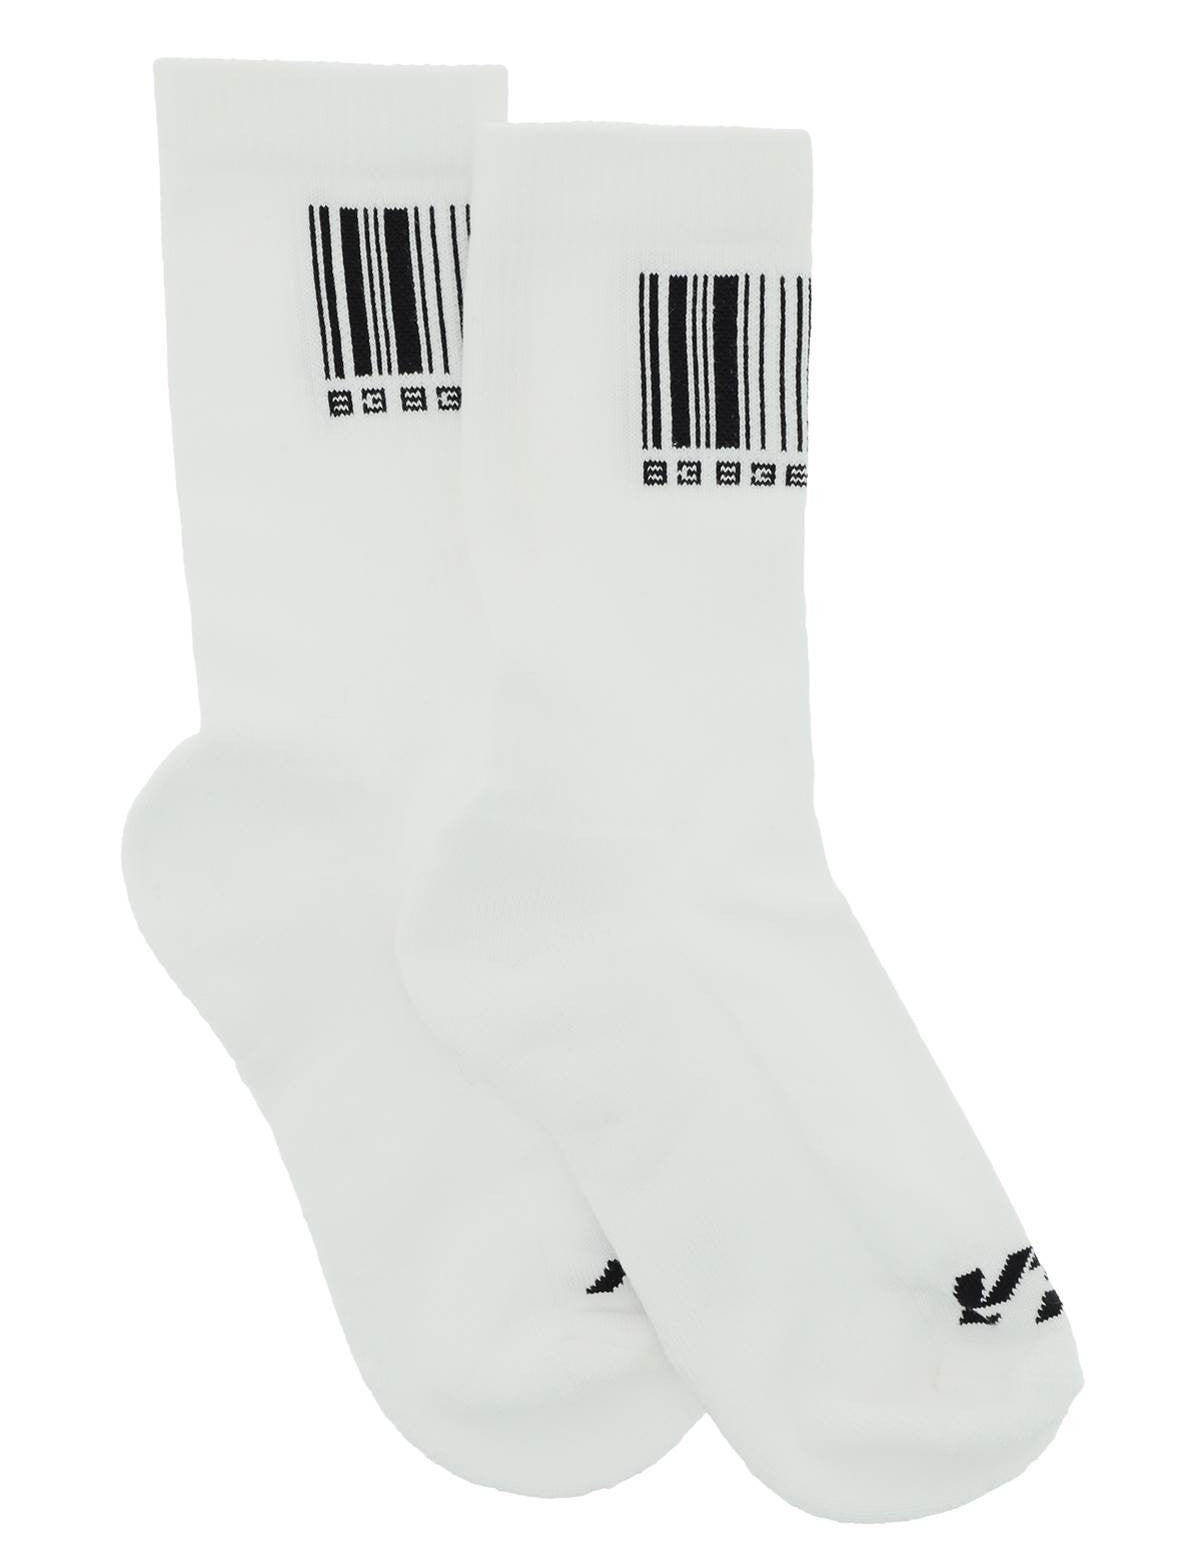 vtmnts-barcode-socks.jpg